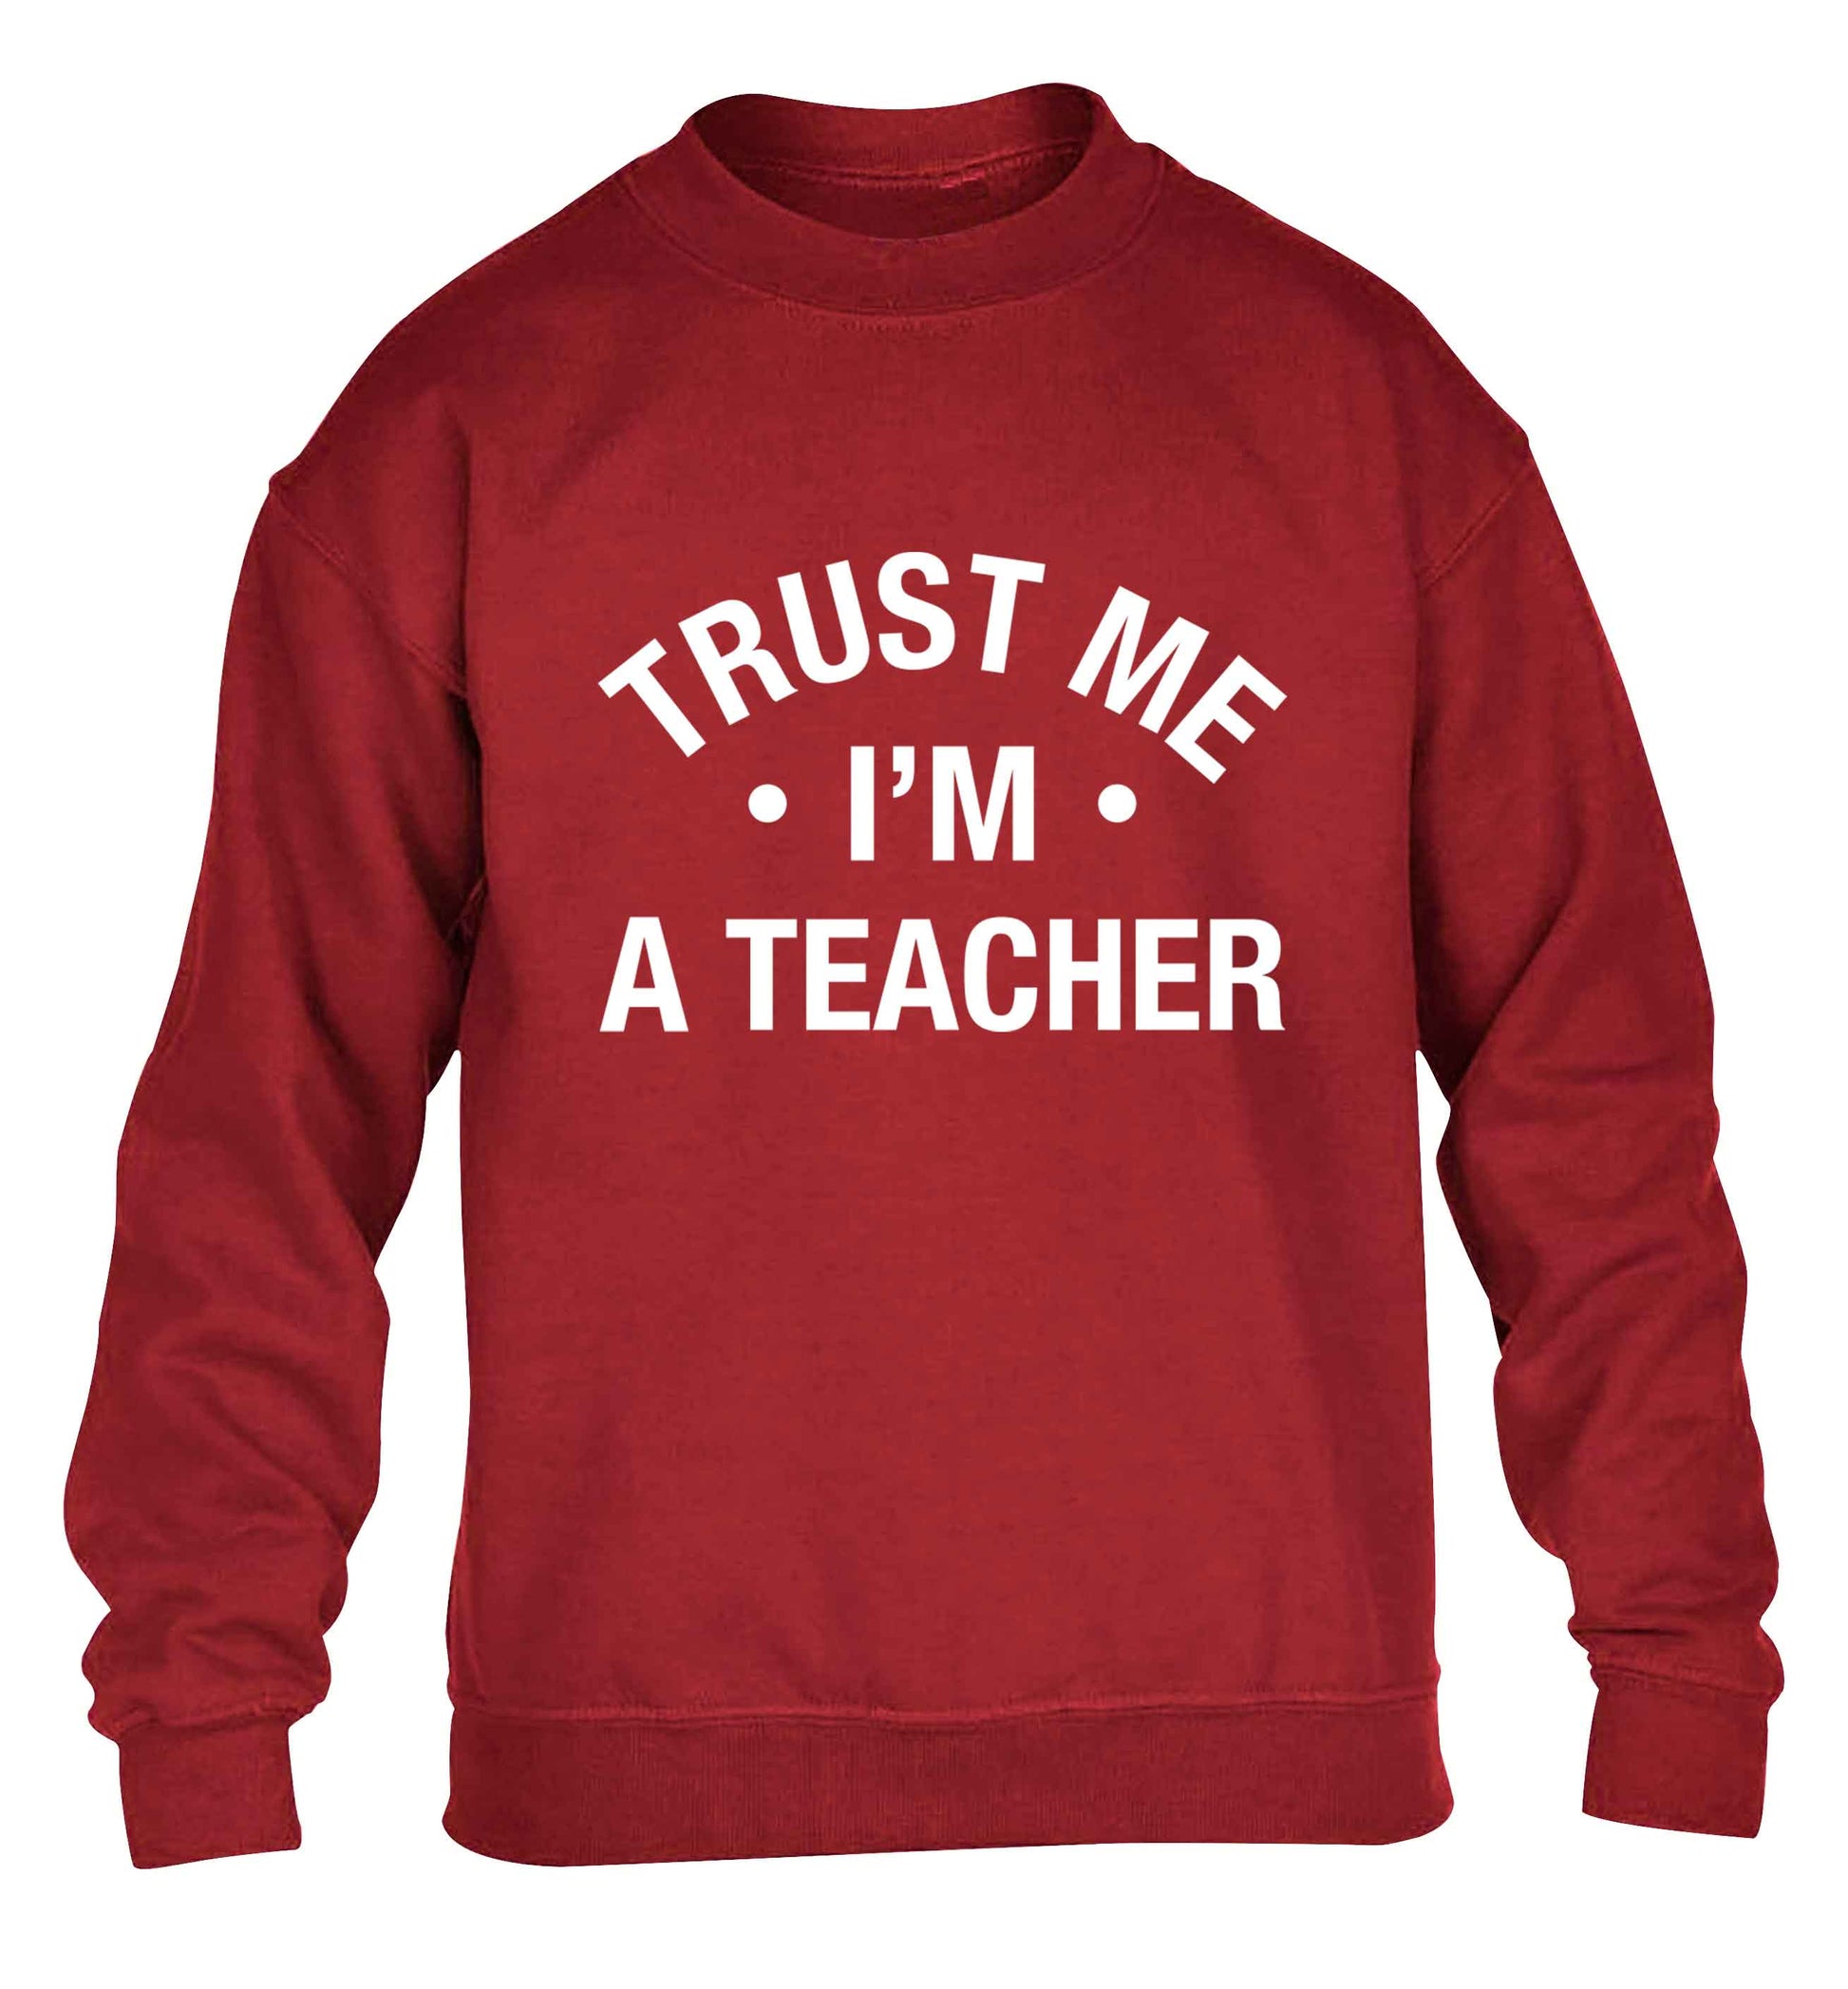 Trust me I'm a teacher children's grey sweater 12-13 Years